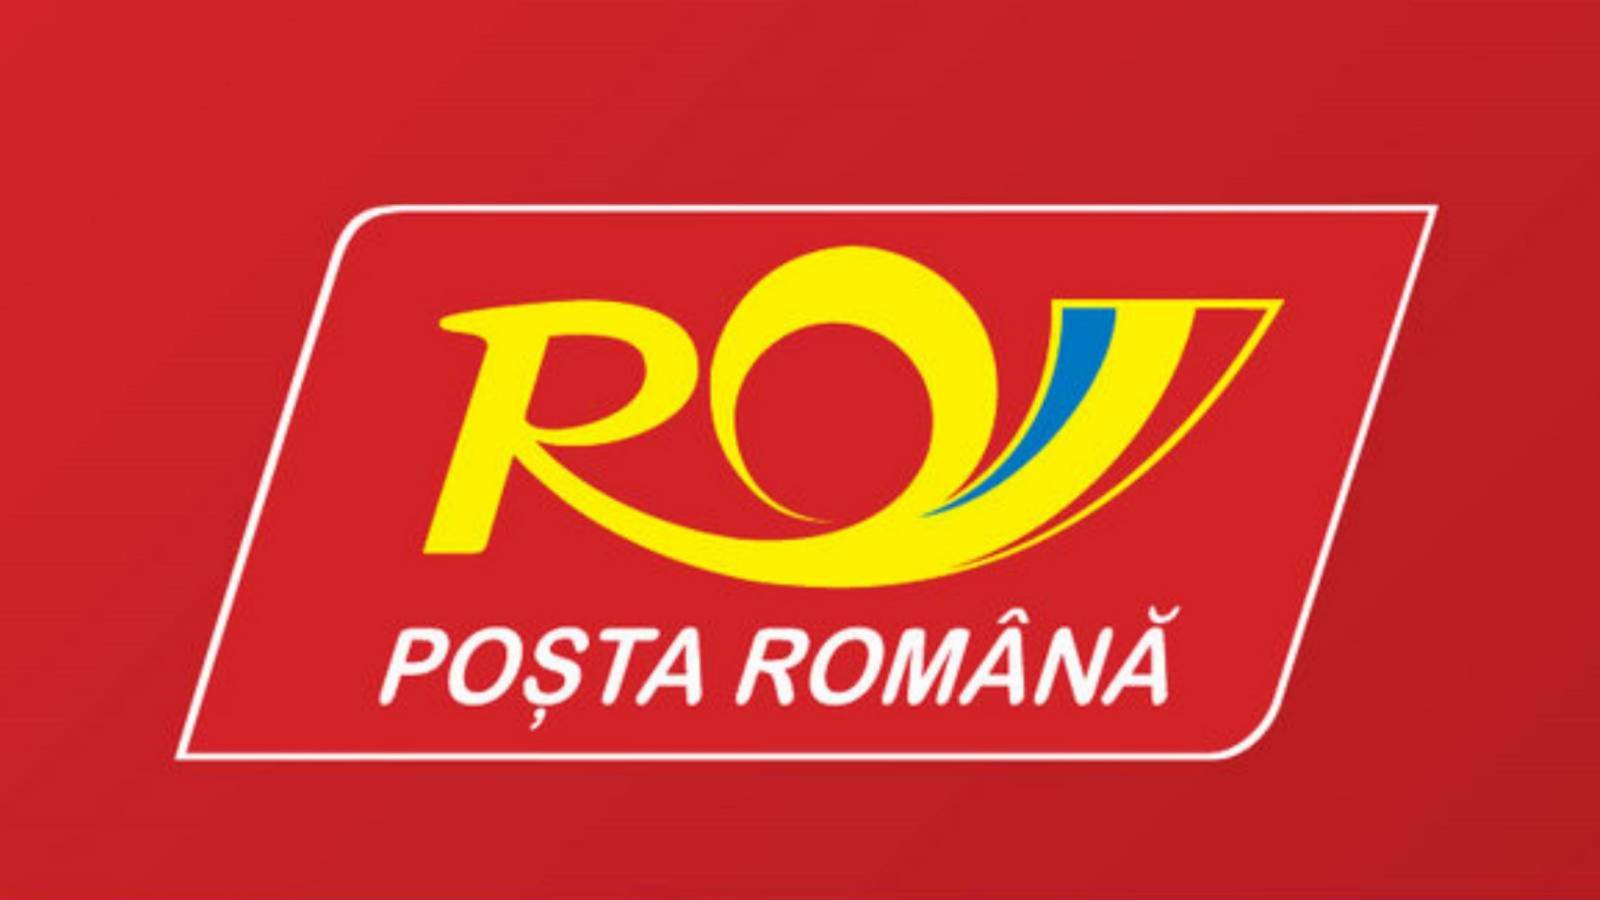 Roemeense postpakketverzekering